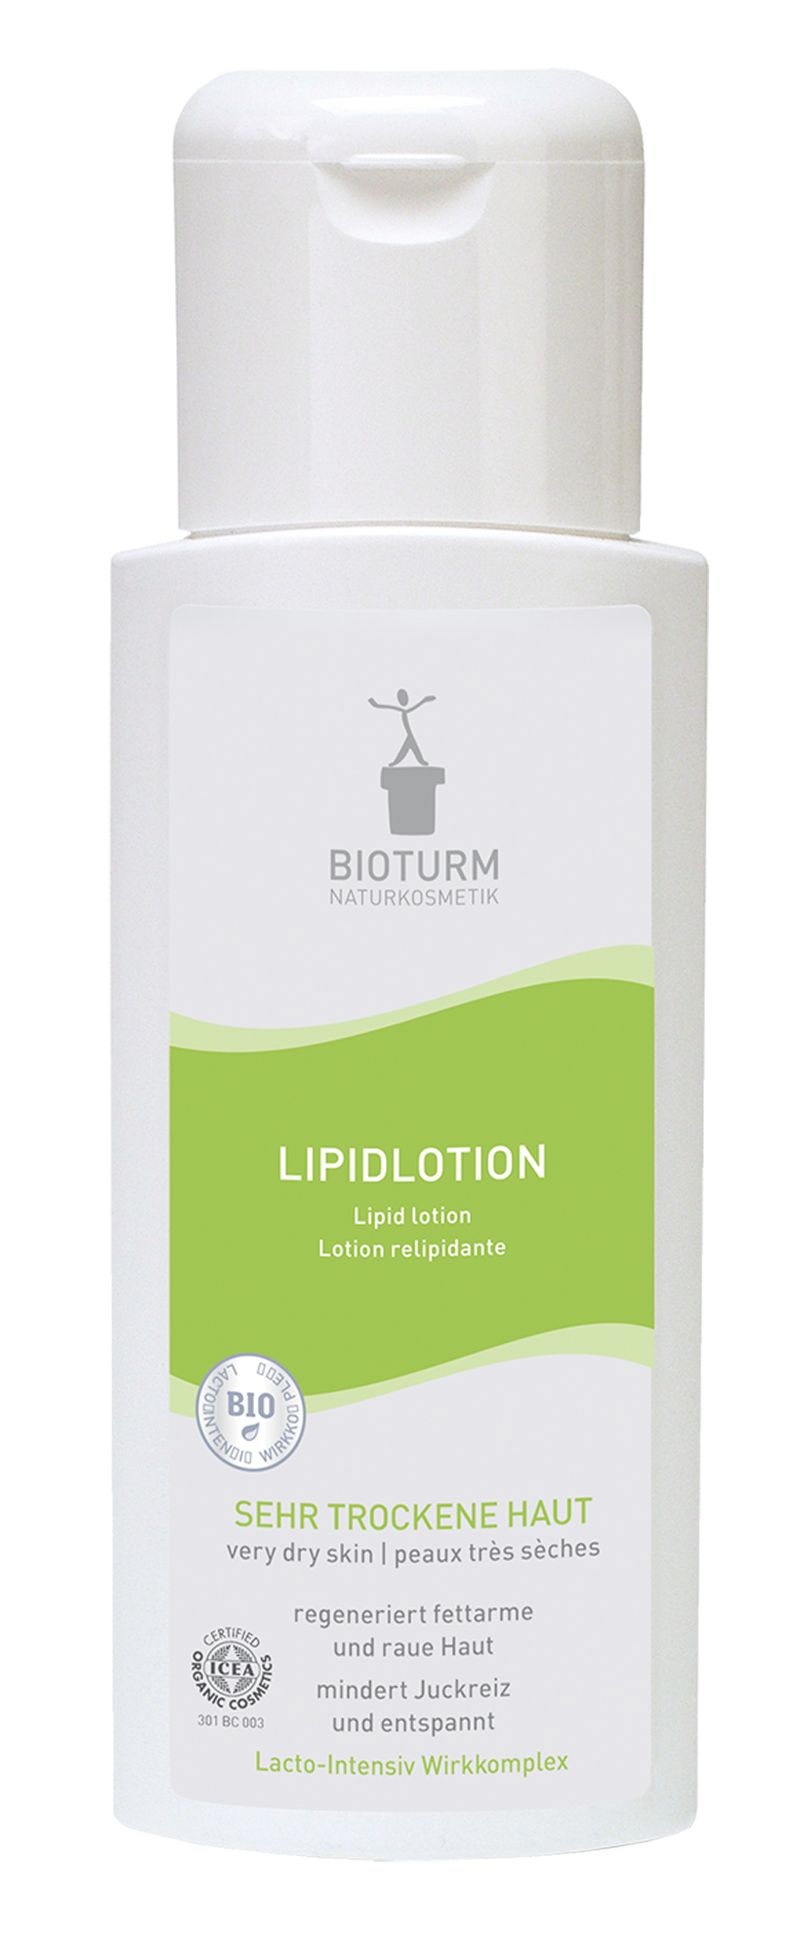 BIOTURM Lipidlotion